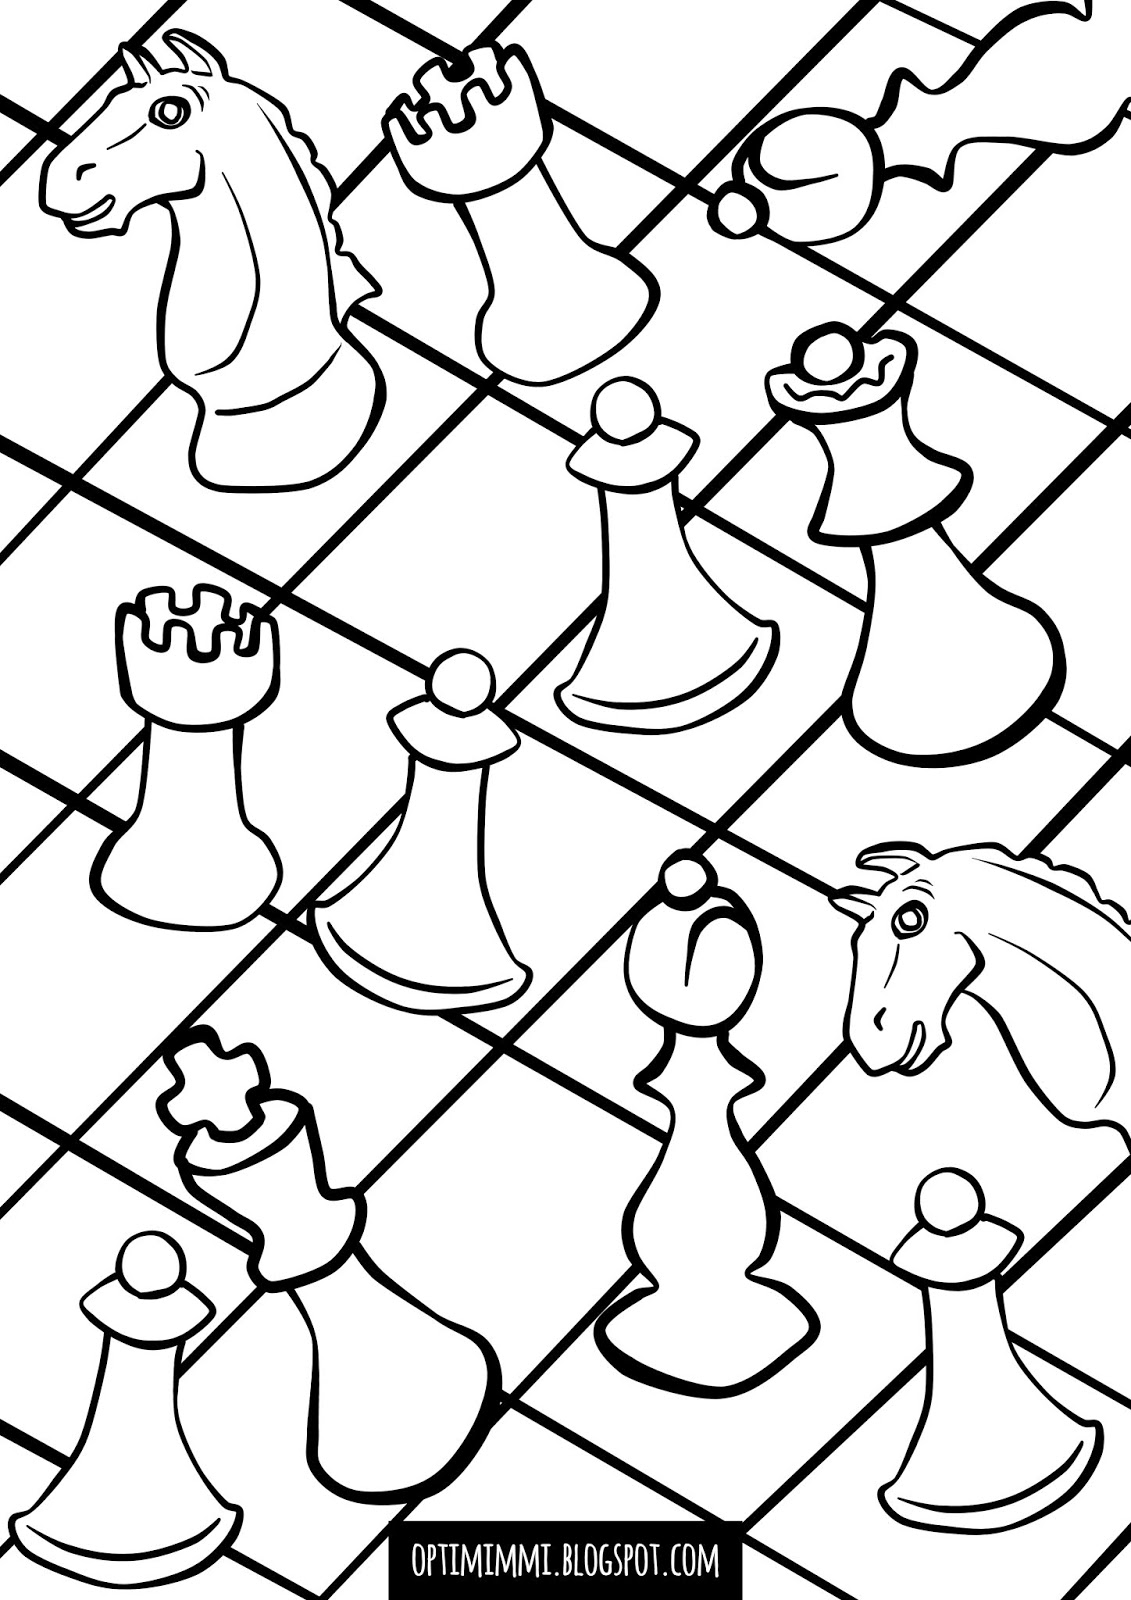 chess-a-coloring-page-shakki-v-rityskuva